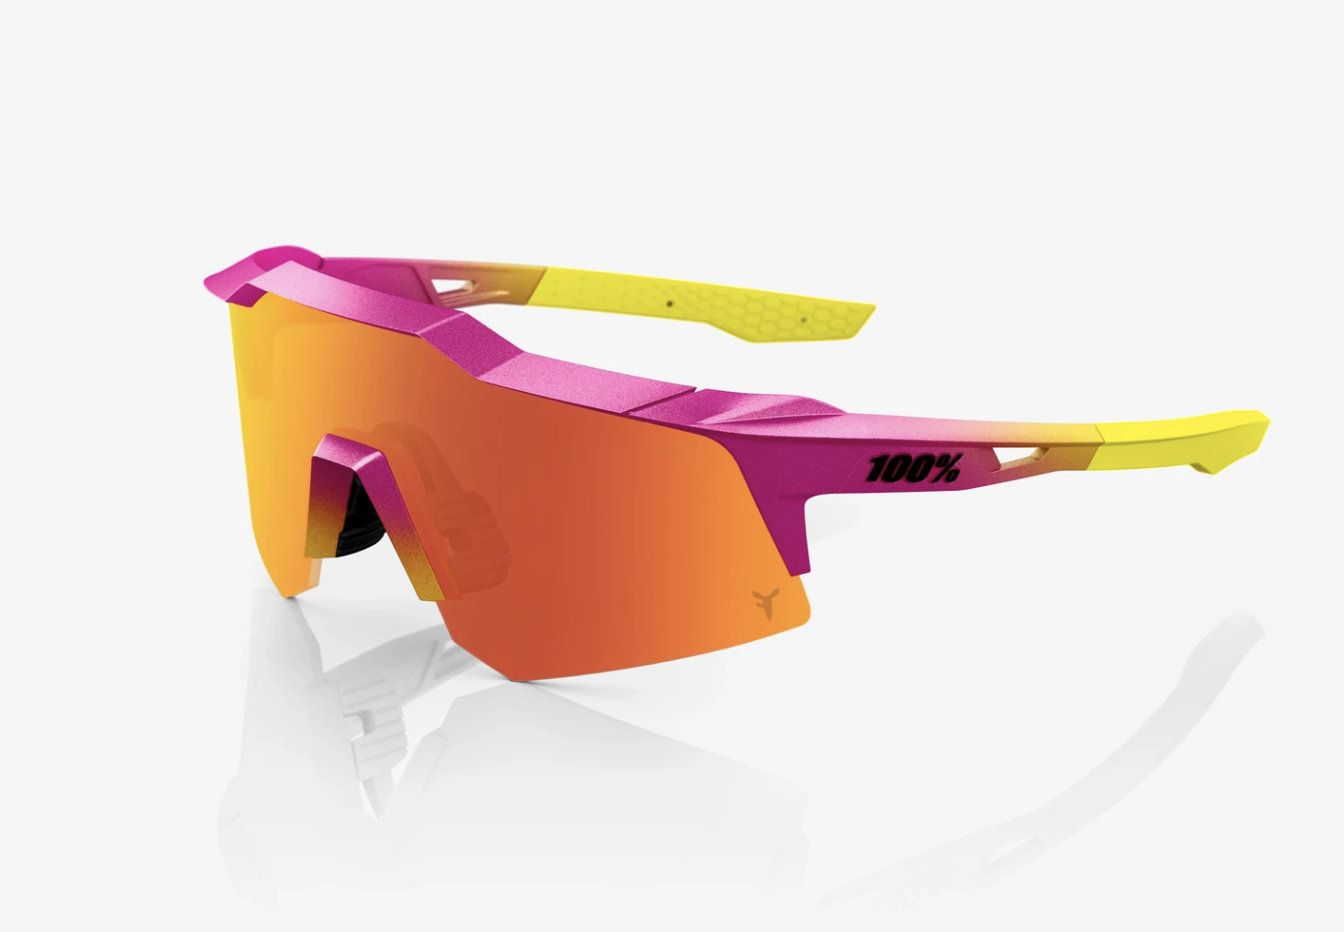 100% Speedcraft XS Fernando Tatis Jr Special Edition Colorway Metallic Pink Fading to Yellow